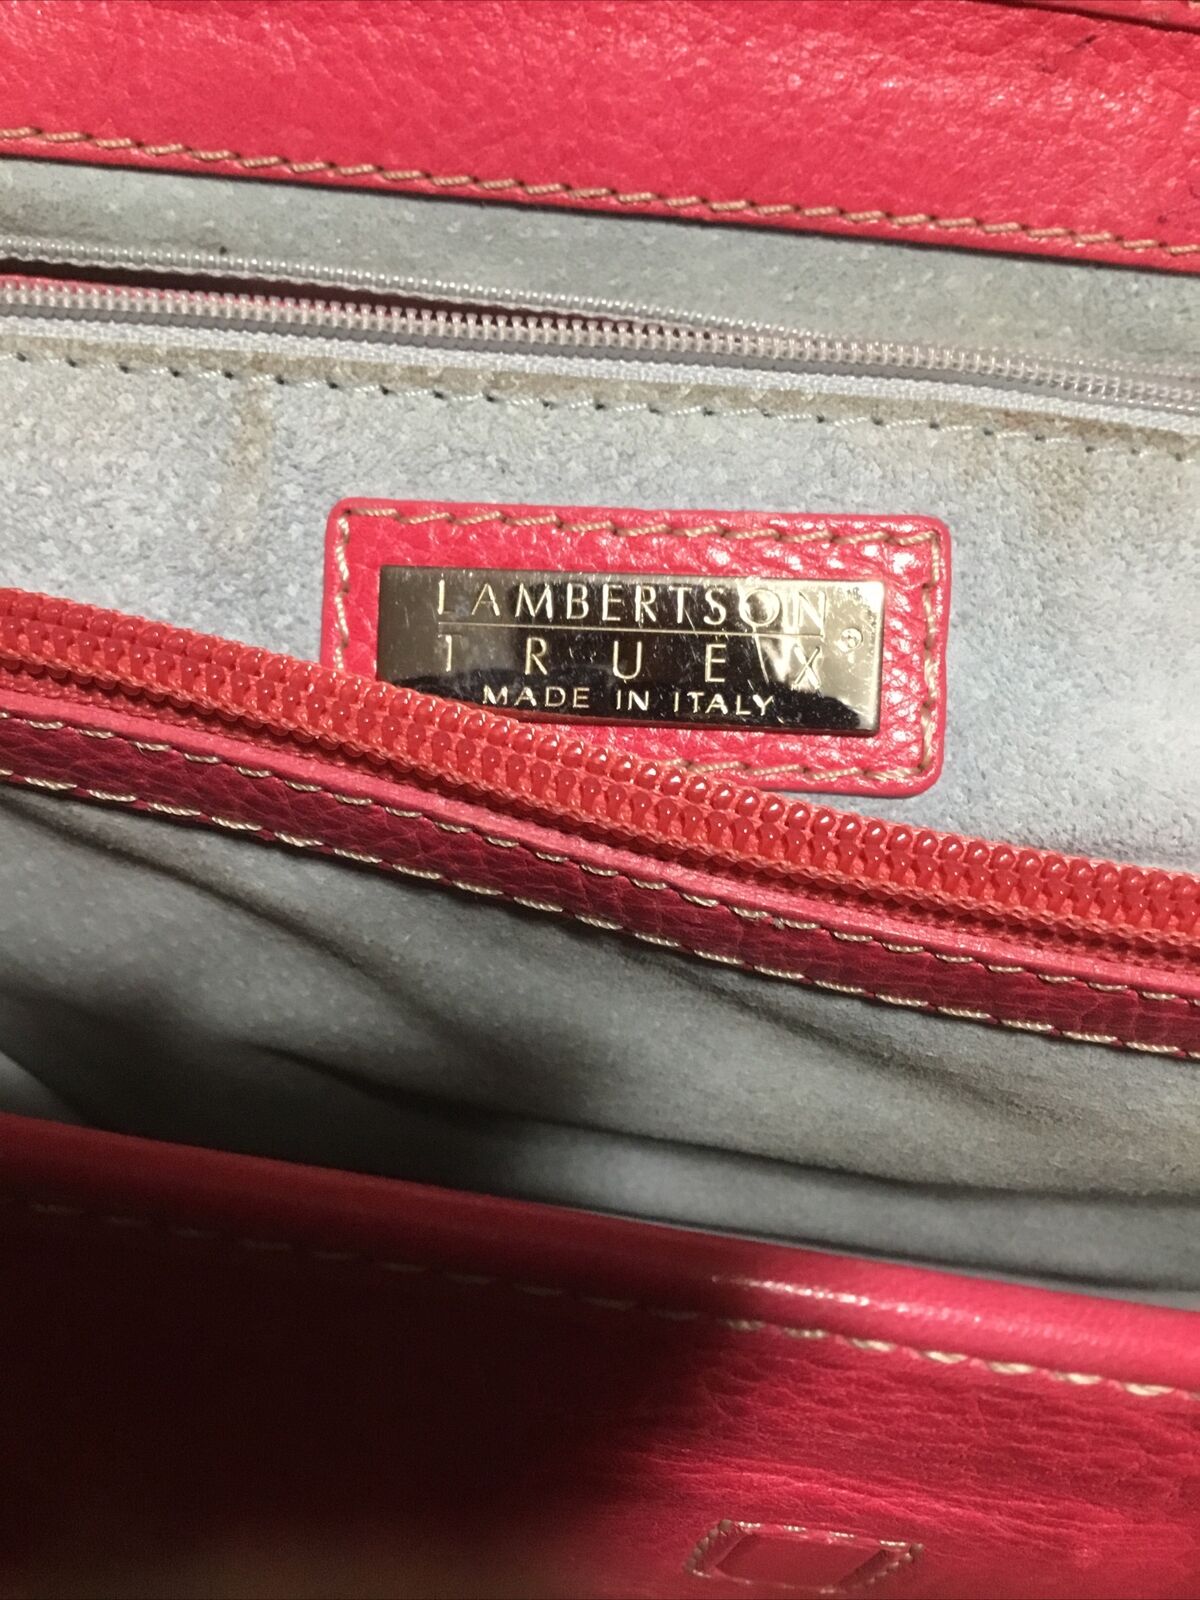 Lambertson Truex Vintage Hot Pink Leather Satchel - image 6